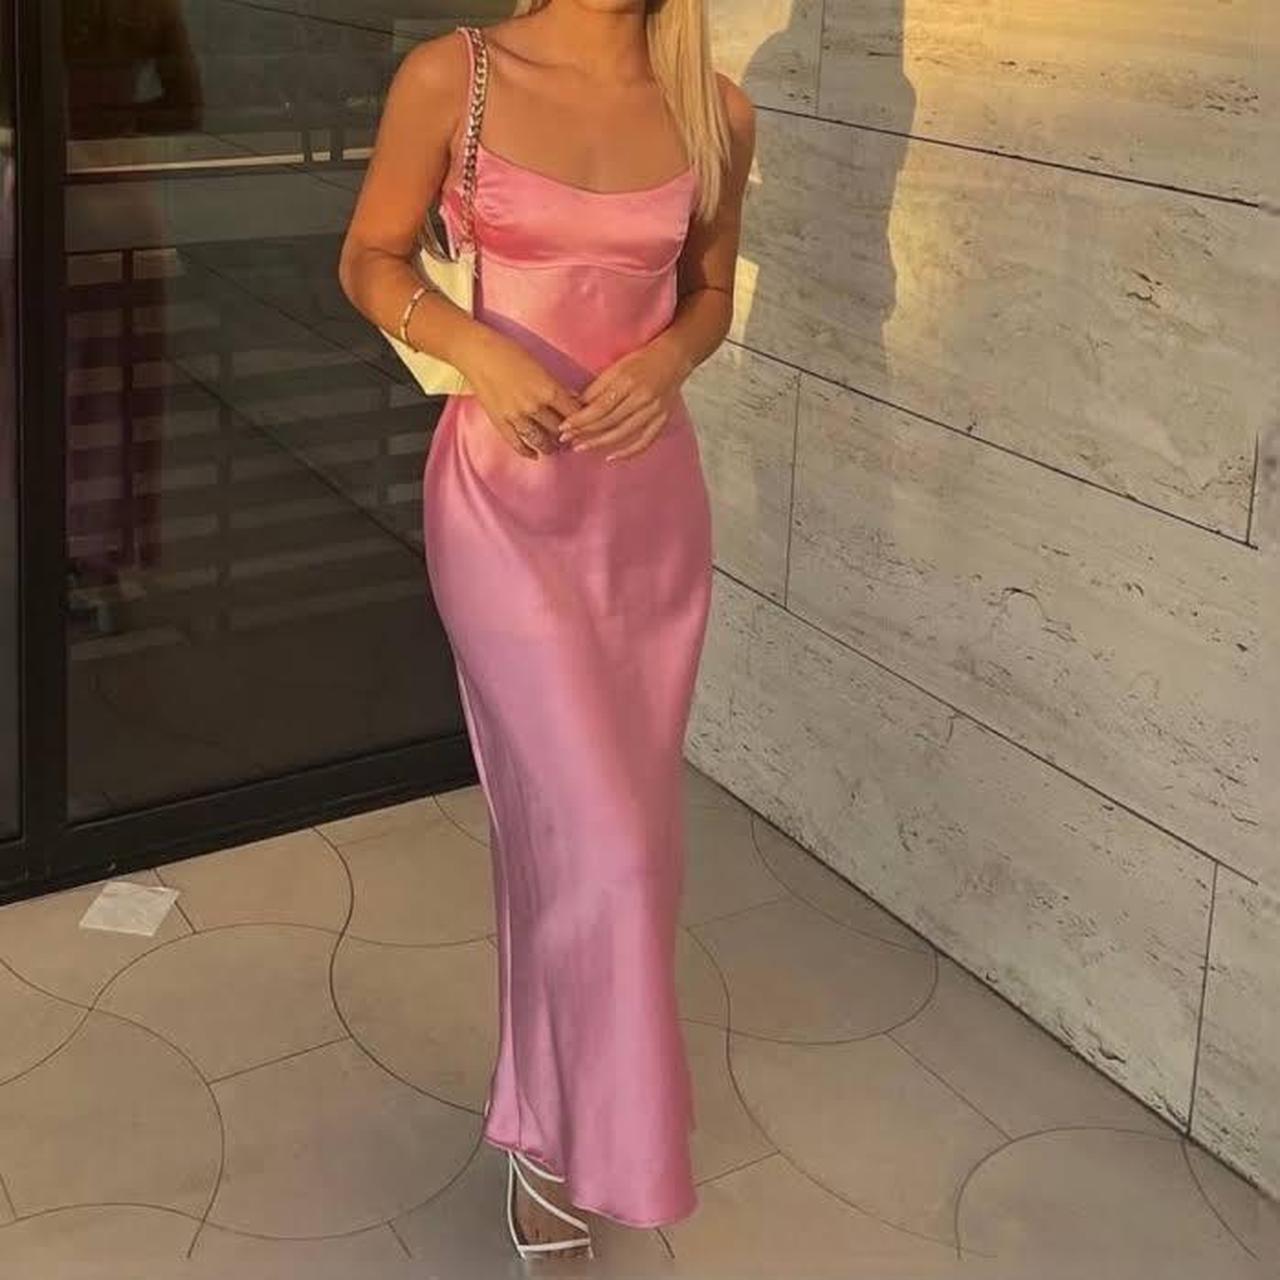 Jessica Simpson lingerie dress 💕 color is more pink - Depop